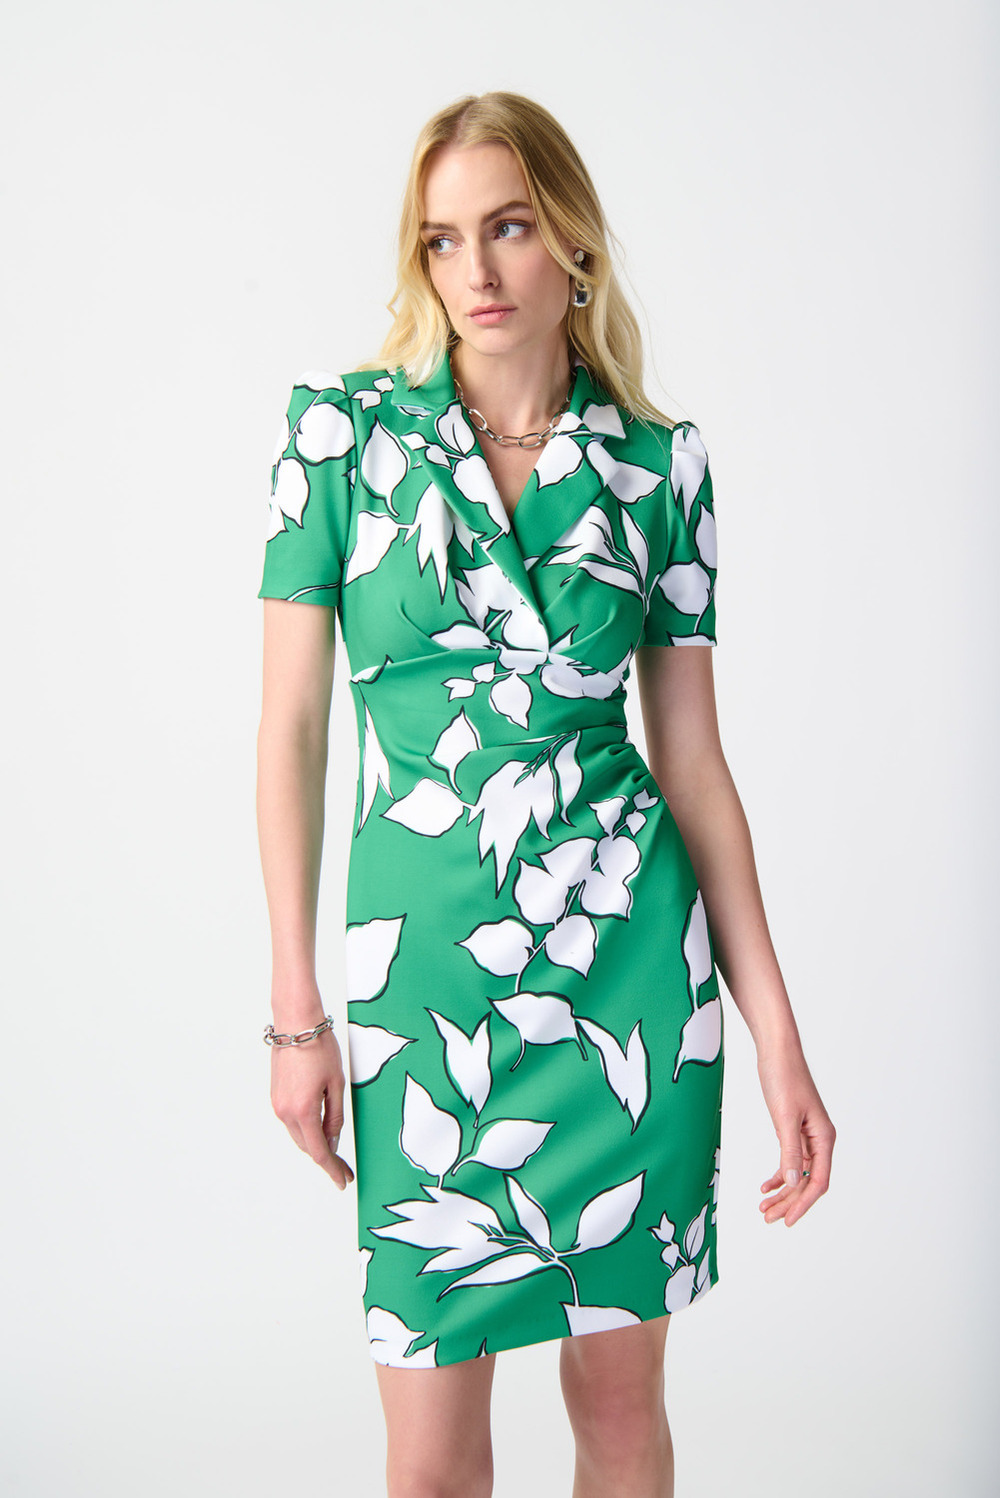 Leaf Print Wrap Front Dress Style 241033. Green/multi